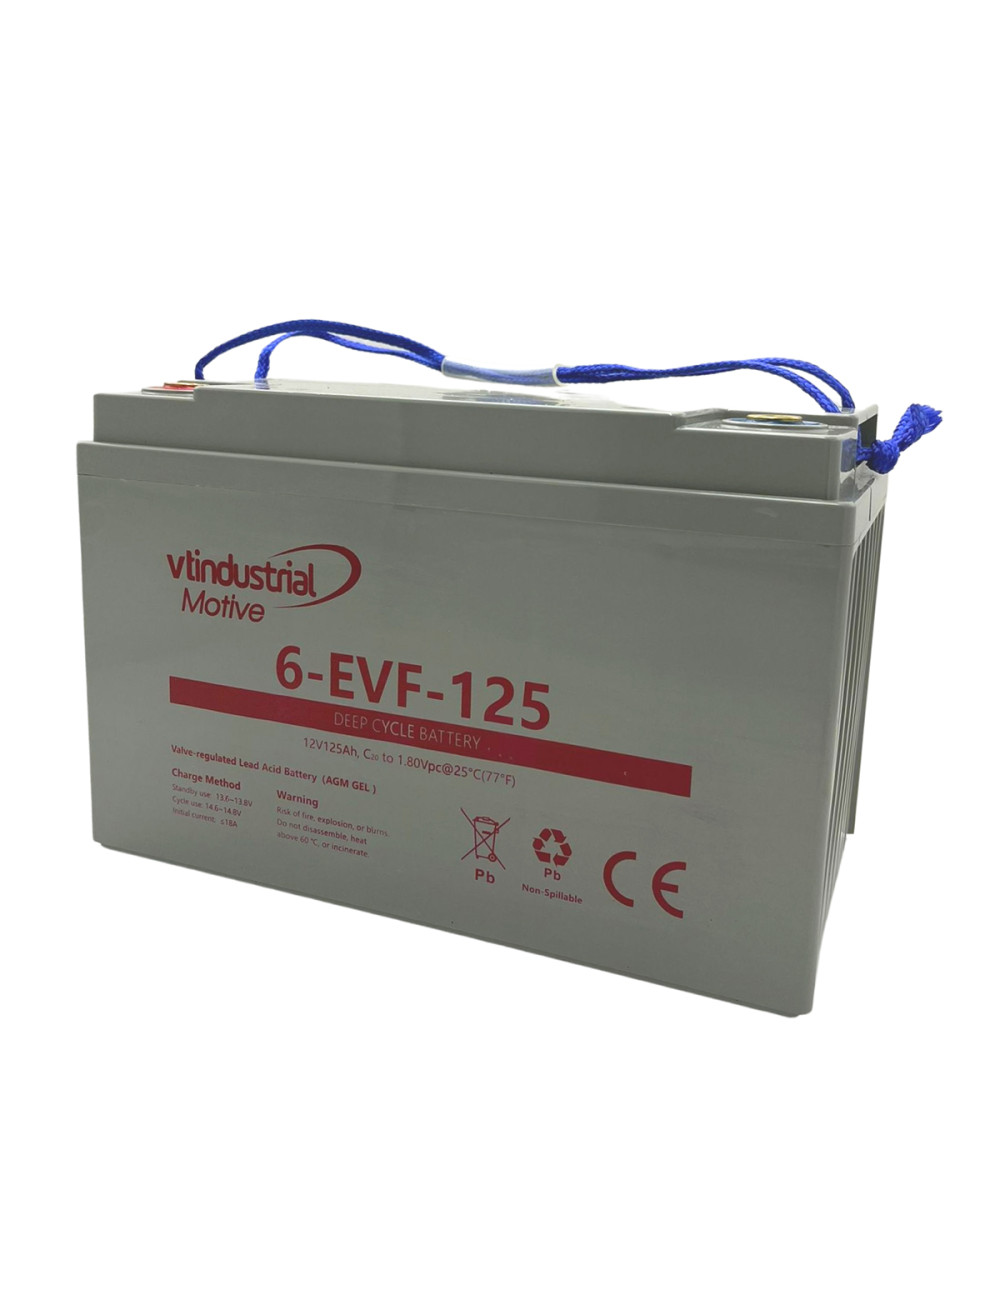 Pack 2 baterías de gel AGM 12V 125Ah C20 ciclo profundo serie Industrial Motive 6-EVF-125 - 2x6-EVF-125 -  -  - 1